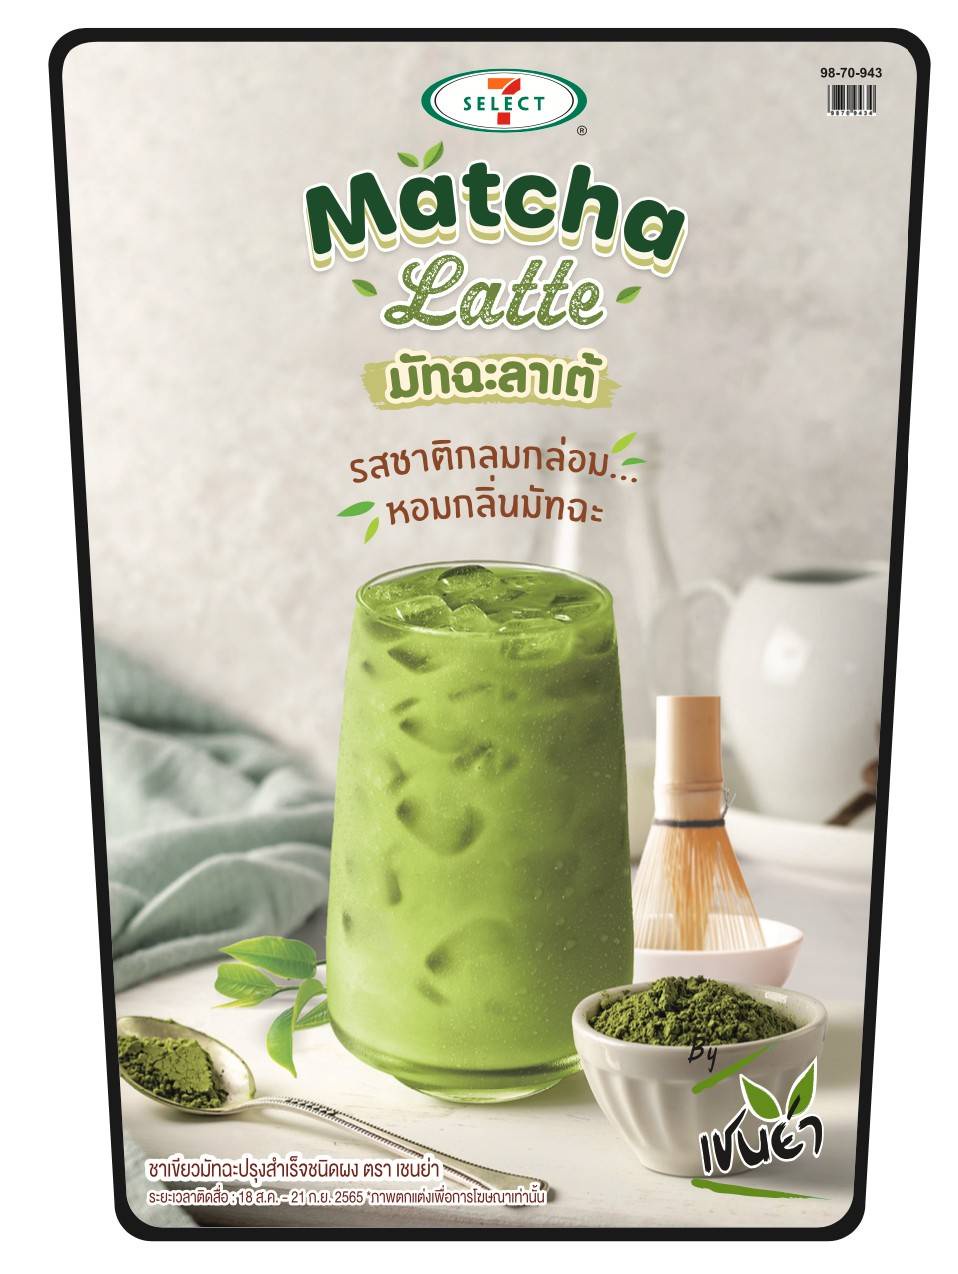 TACC พร้อมเสิร์ฟ Matcha Latte ตามคำเรียกร้อง! เครื่องดื่มชาเขียวมัทฉะลาเต้ รสชาติกลมกล่อม เริ่มวางจำหน่ายที่ร้านเซเว่นฯ